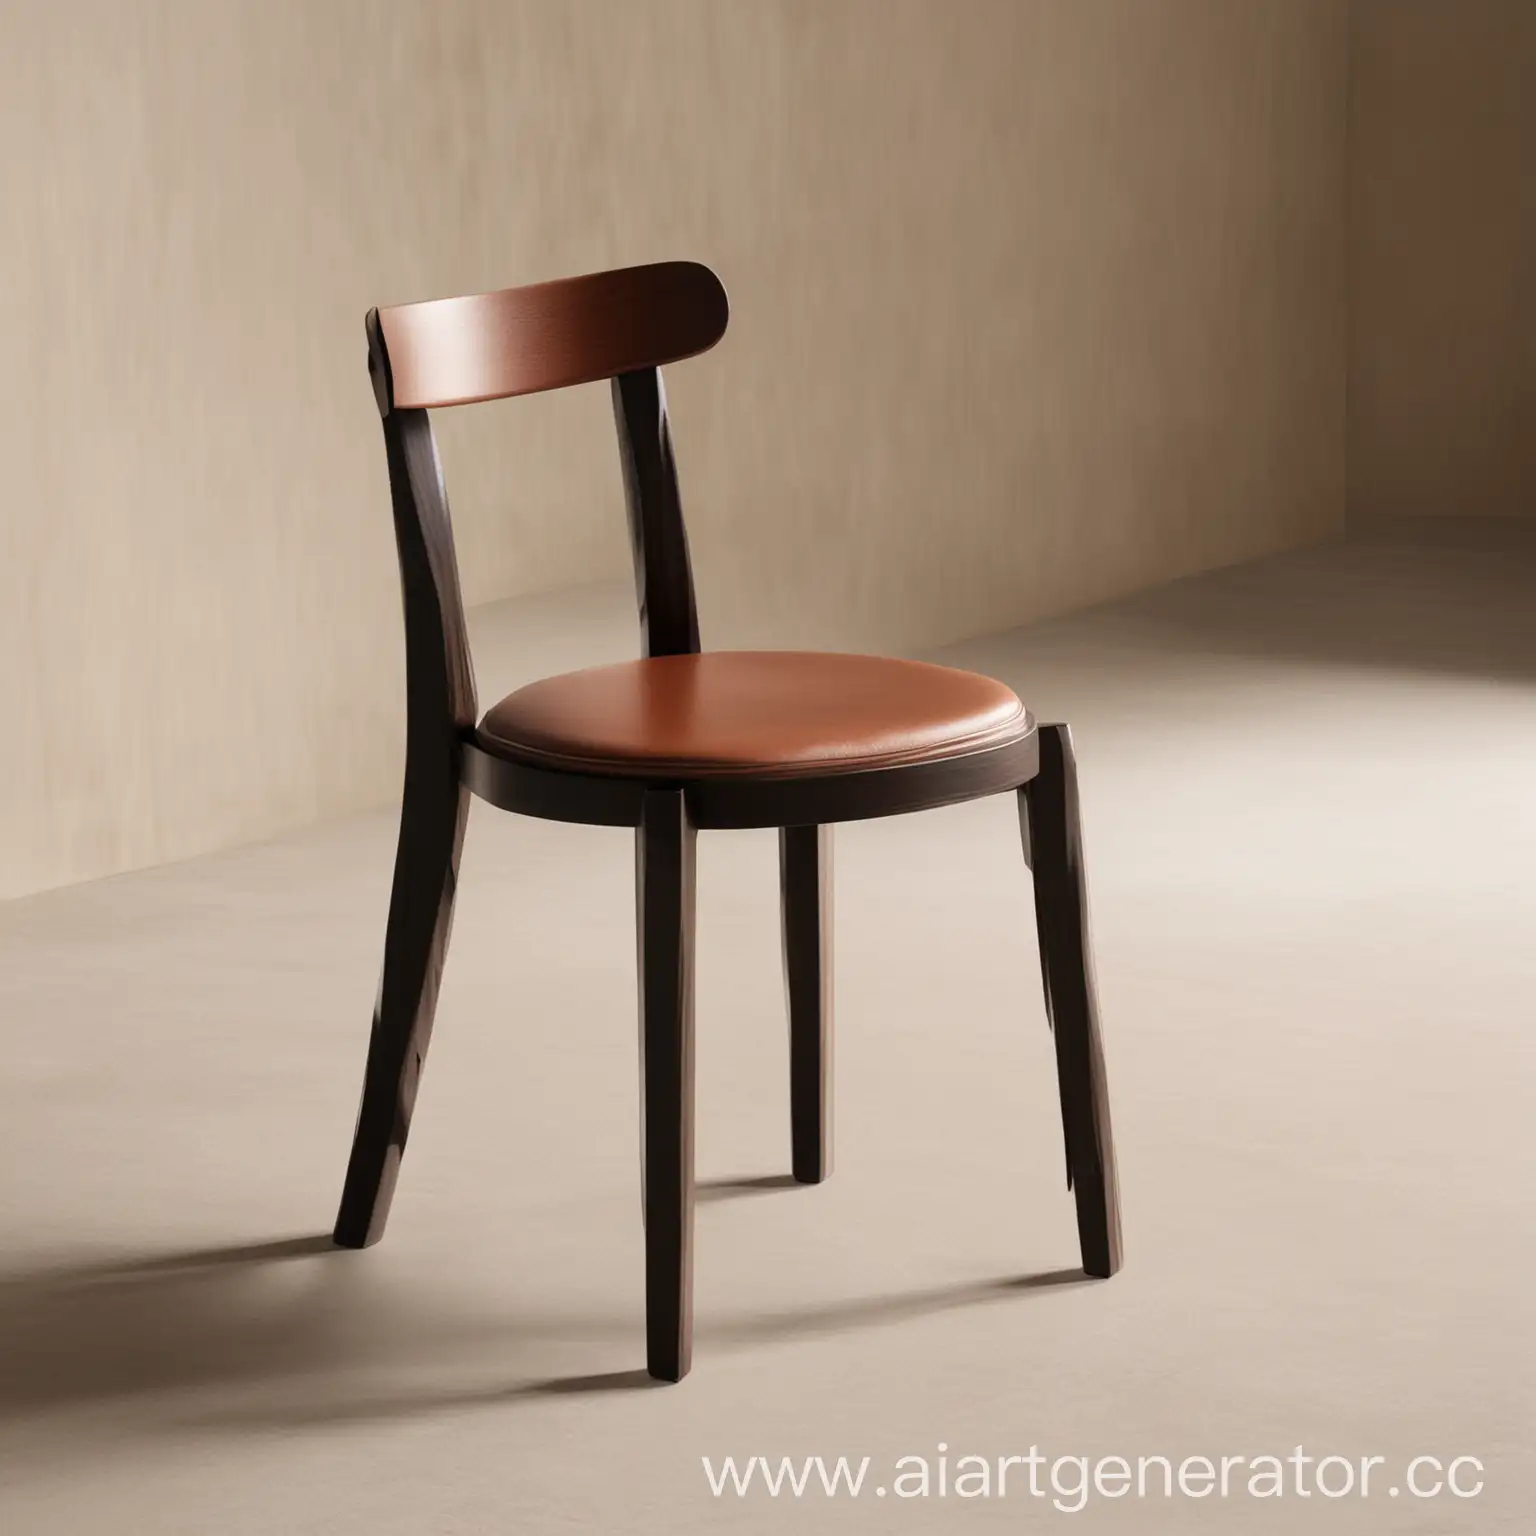 Elegant-Kalos-Chair-by-Maxalto-with-Adjustable-Backrest